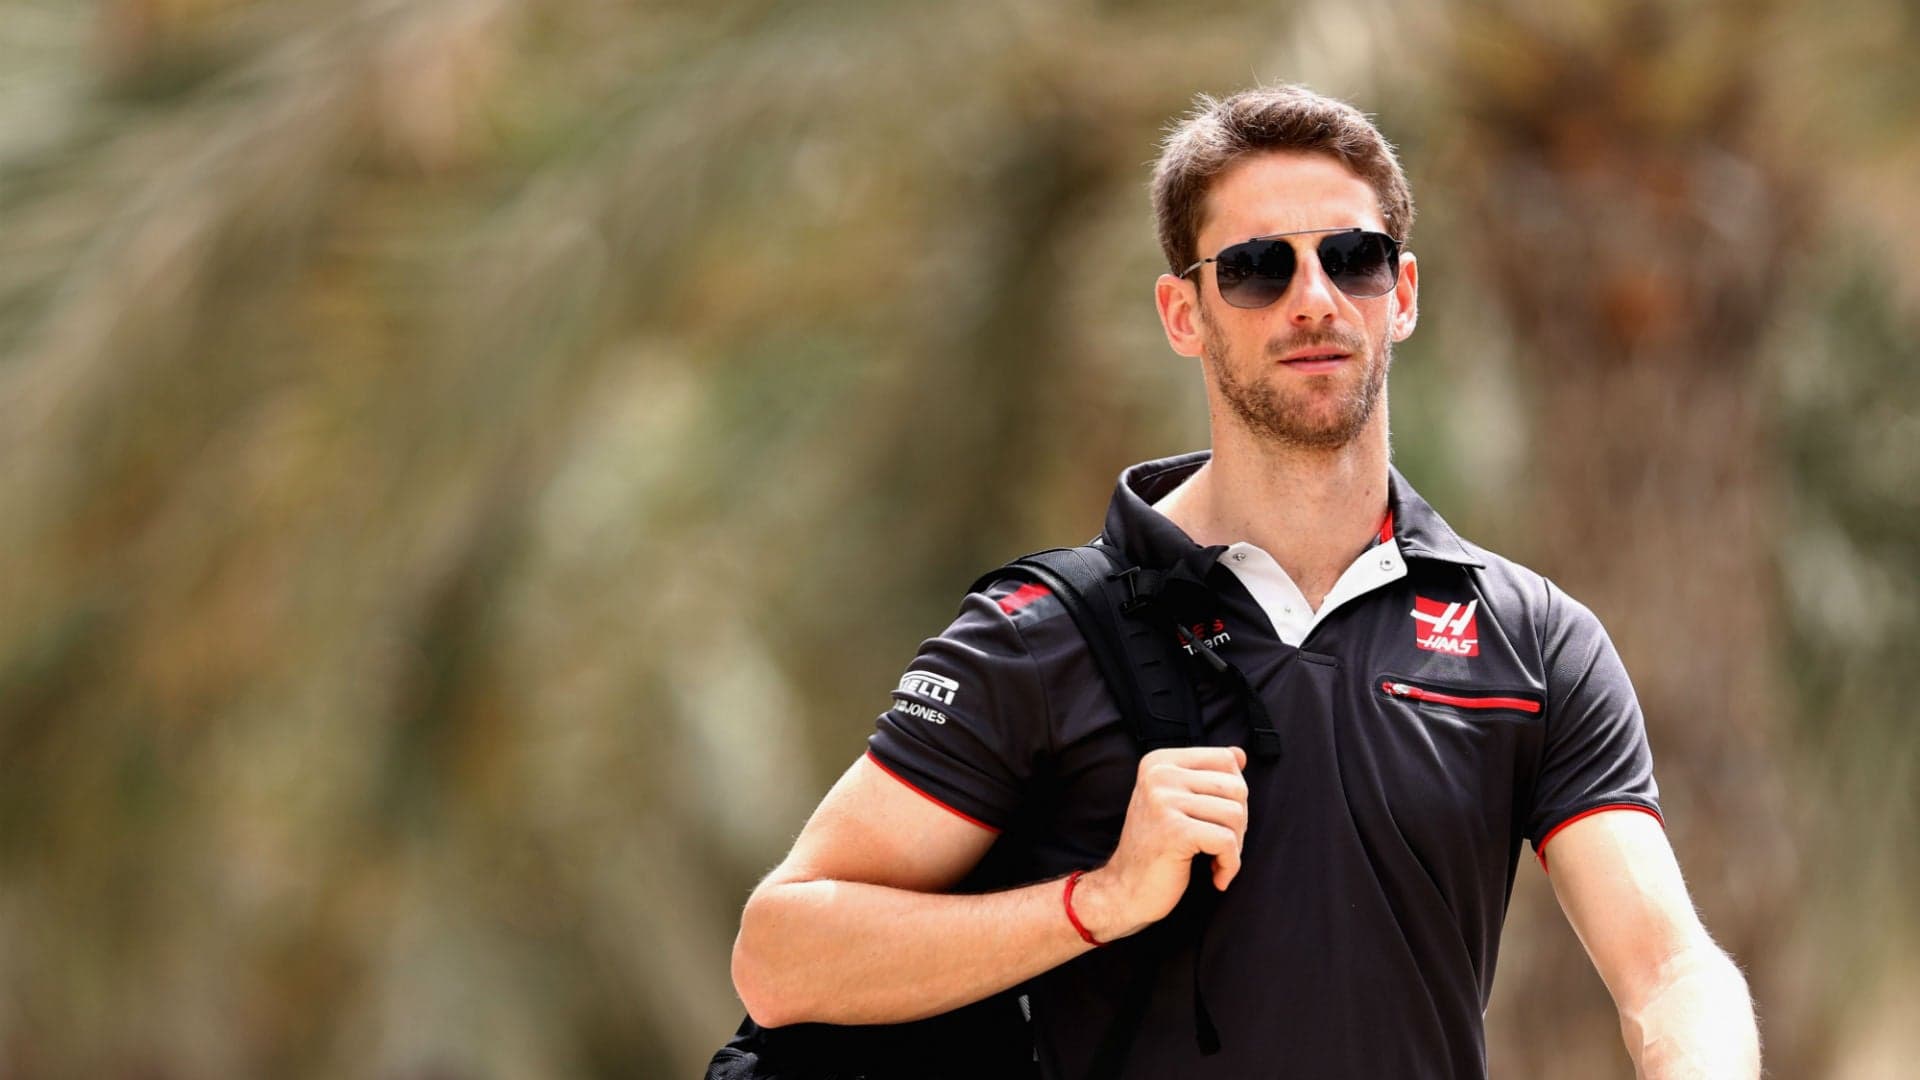 Haas F1’s Romain Grosjean Says He Complains to Improve His Team